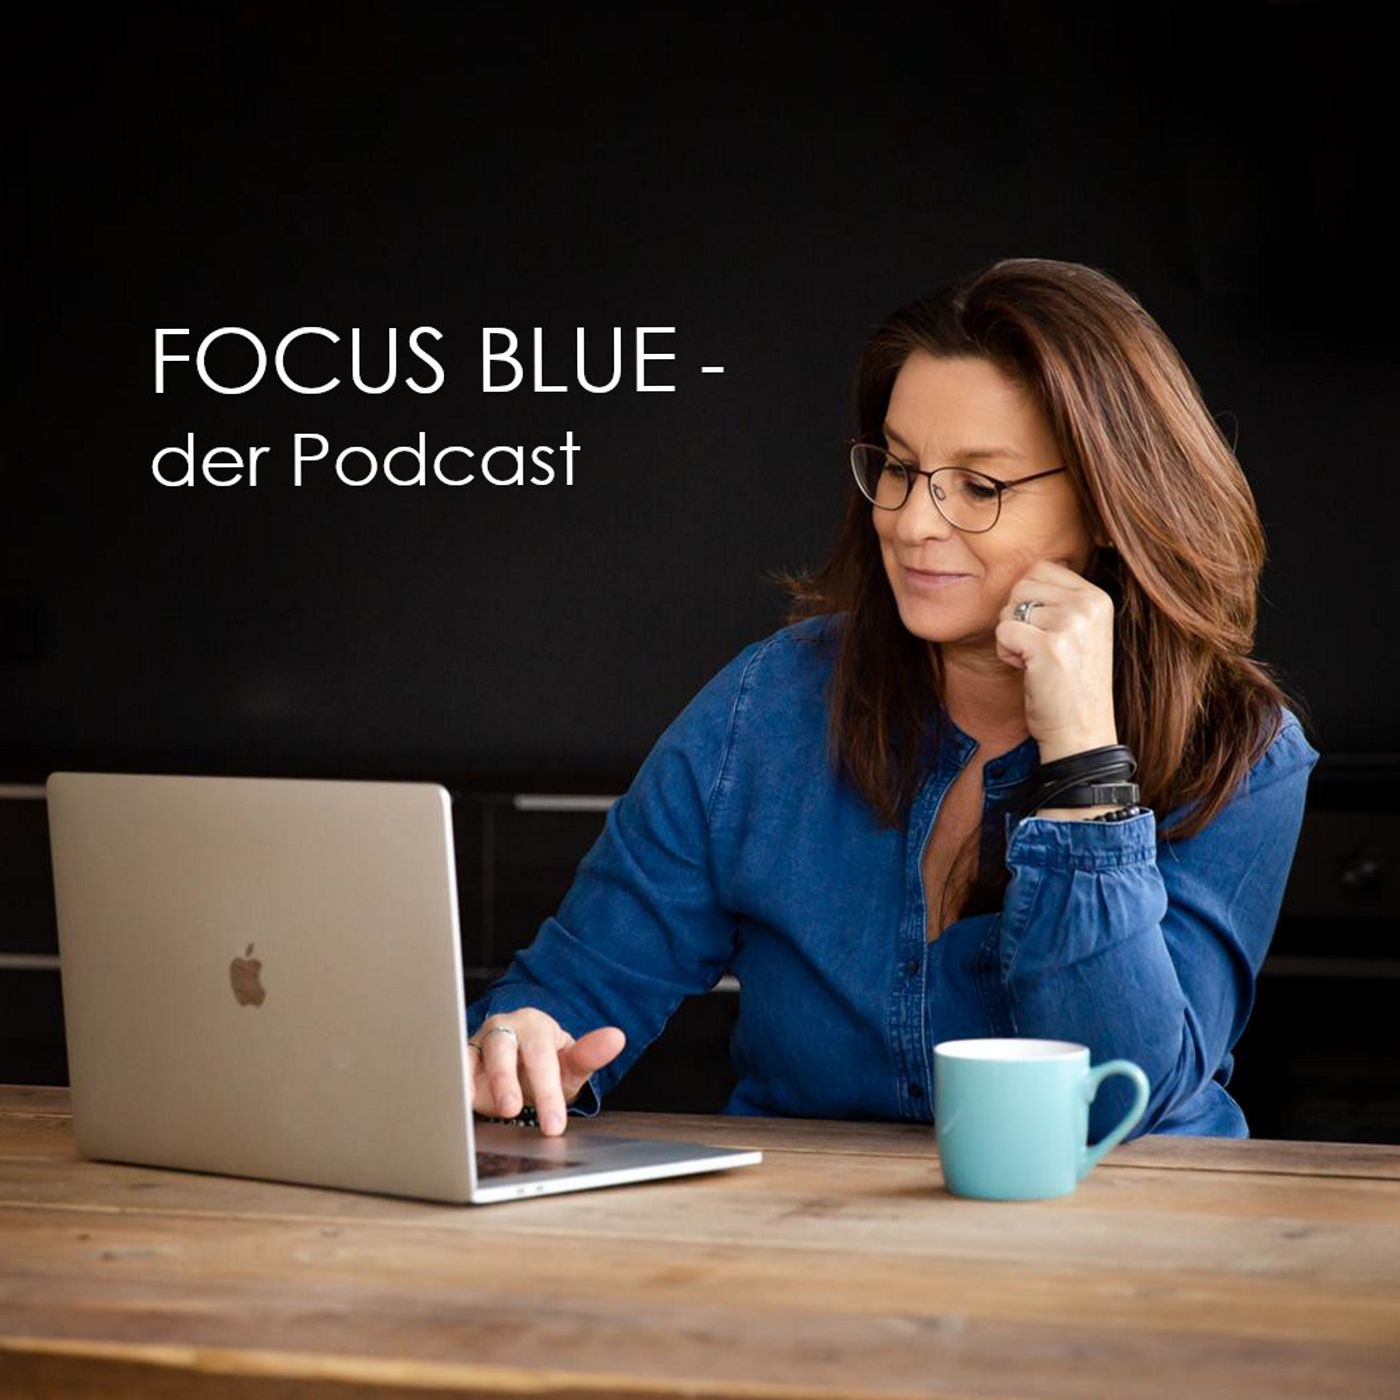 FOCUS BLUE - der Podcast